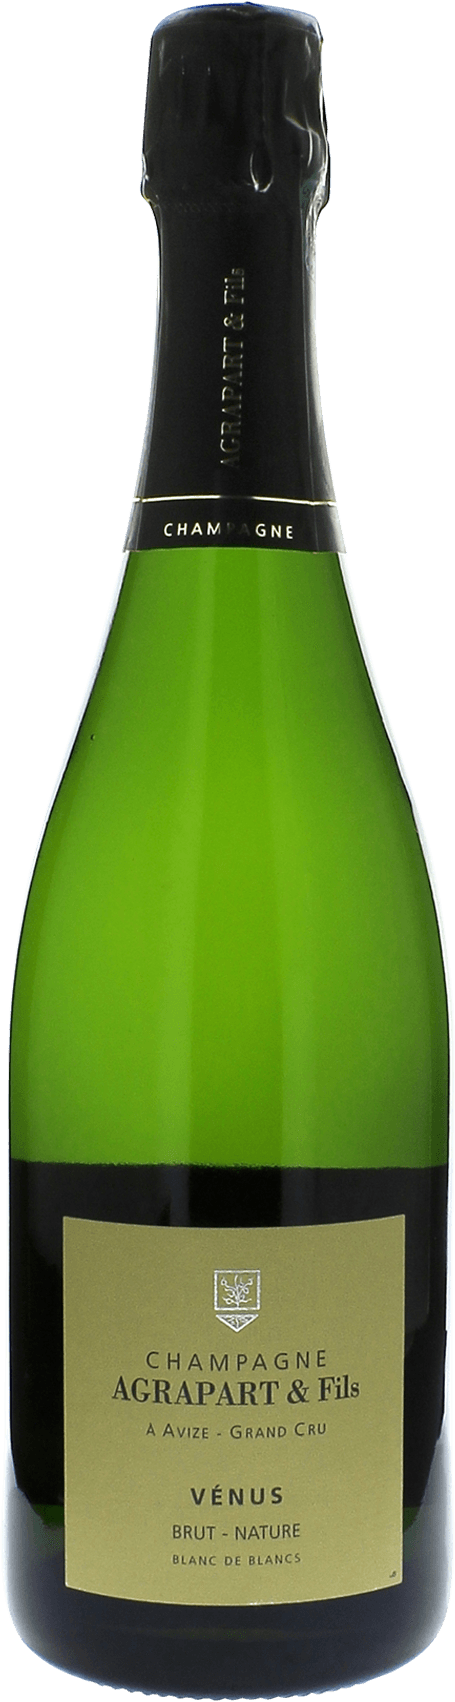 Agrapart  venus brut nature blanc de blancs grand cru 2016  Pascal Agrapart, Champagne